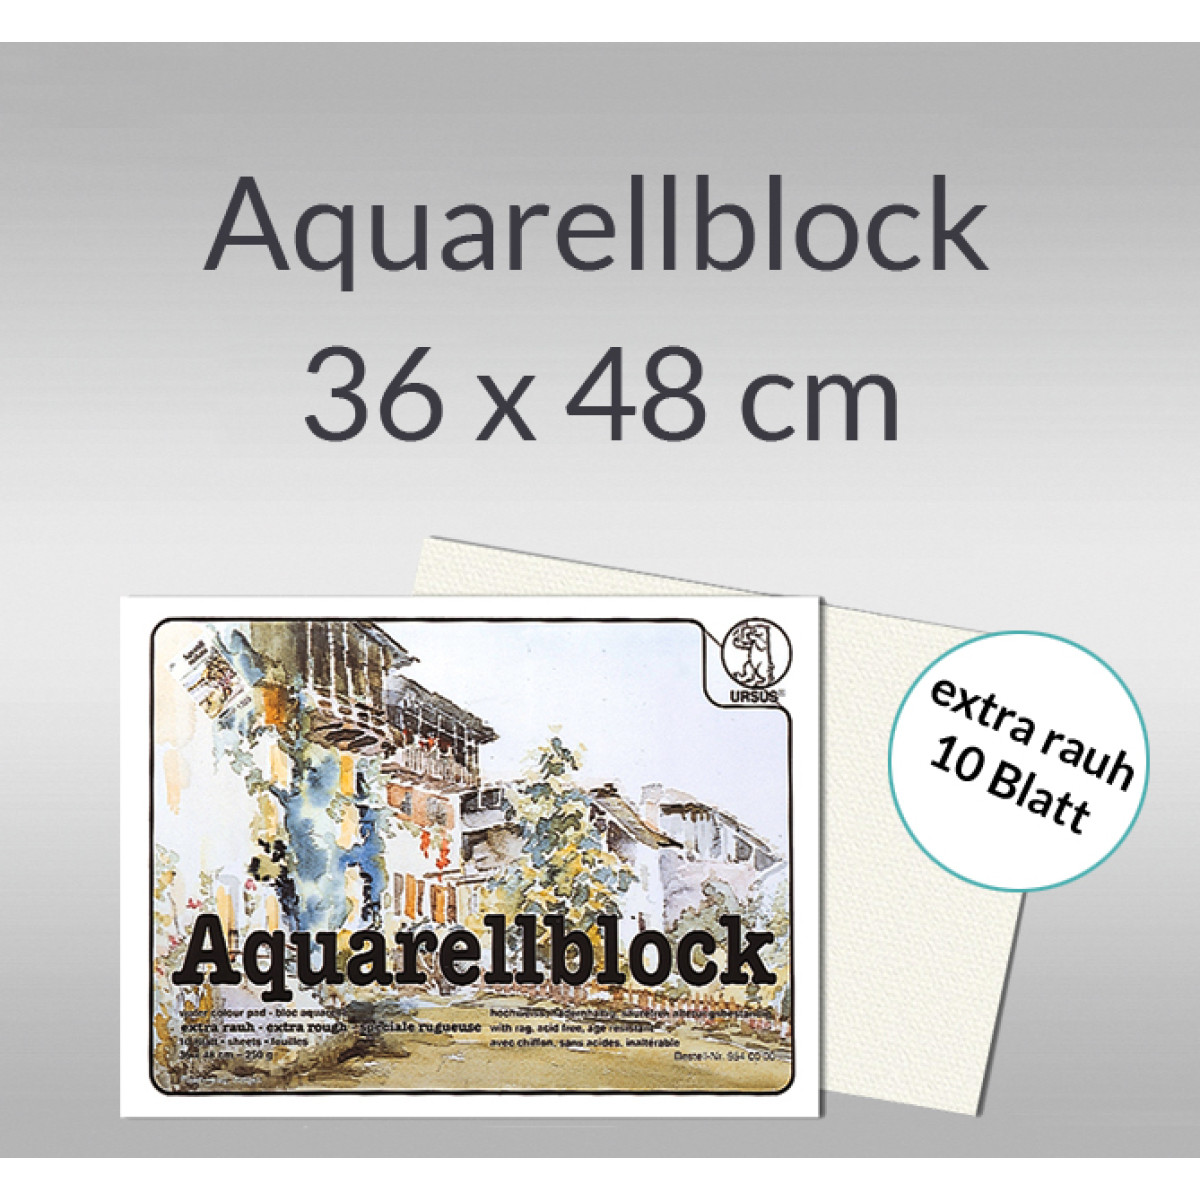 Aquarellblock extra rauh 250 g/qm 36 x 48 cm